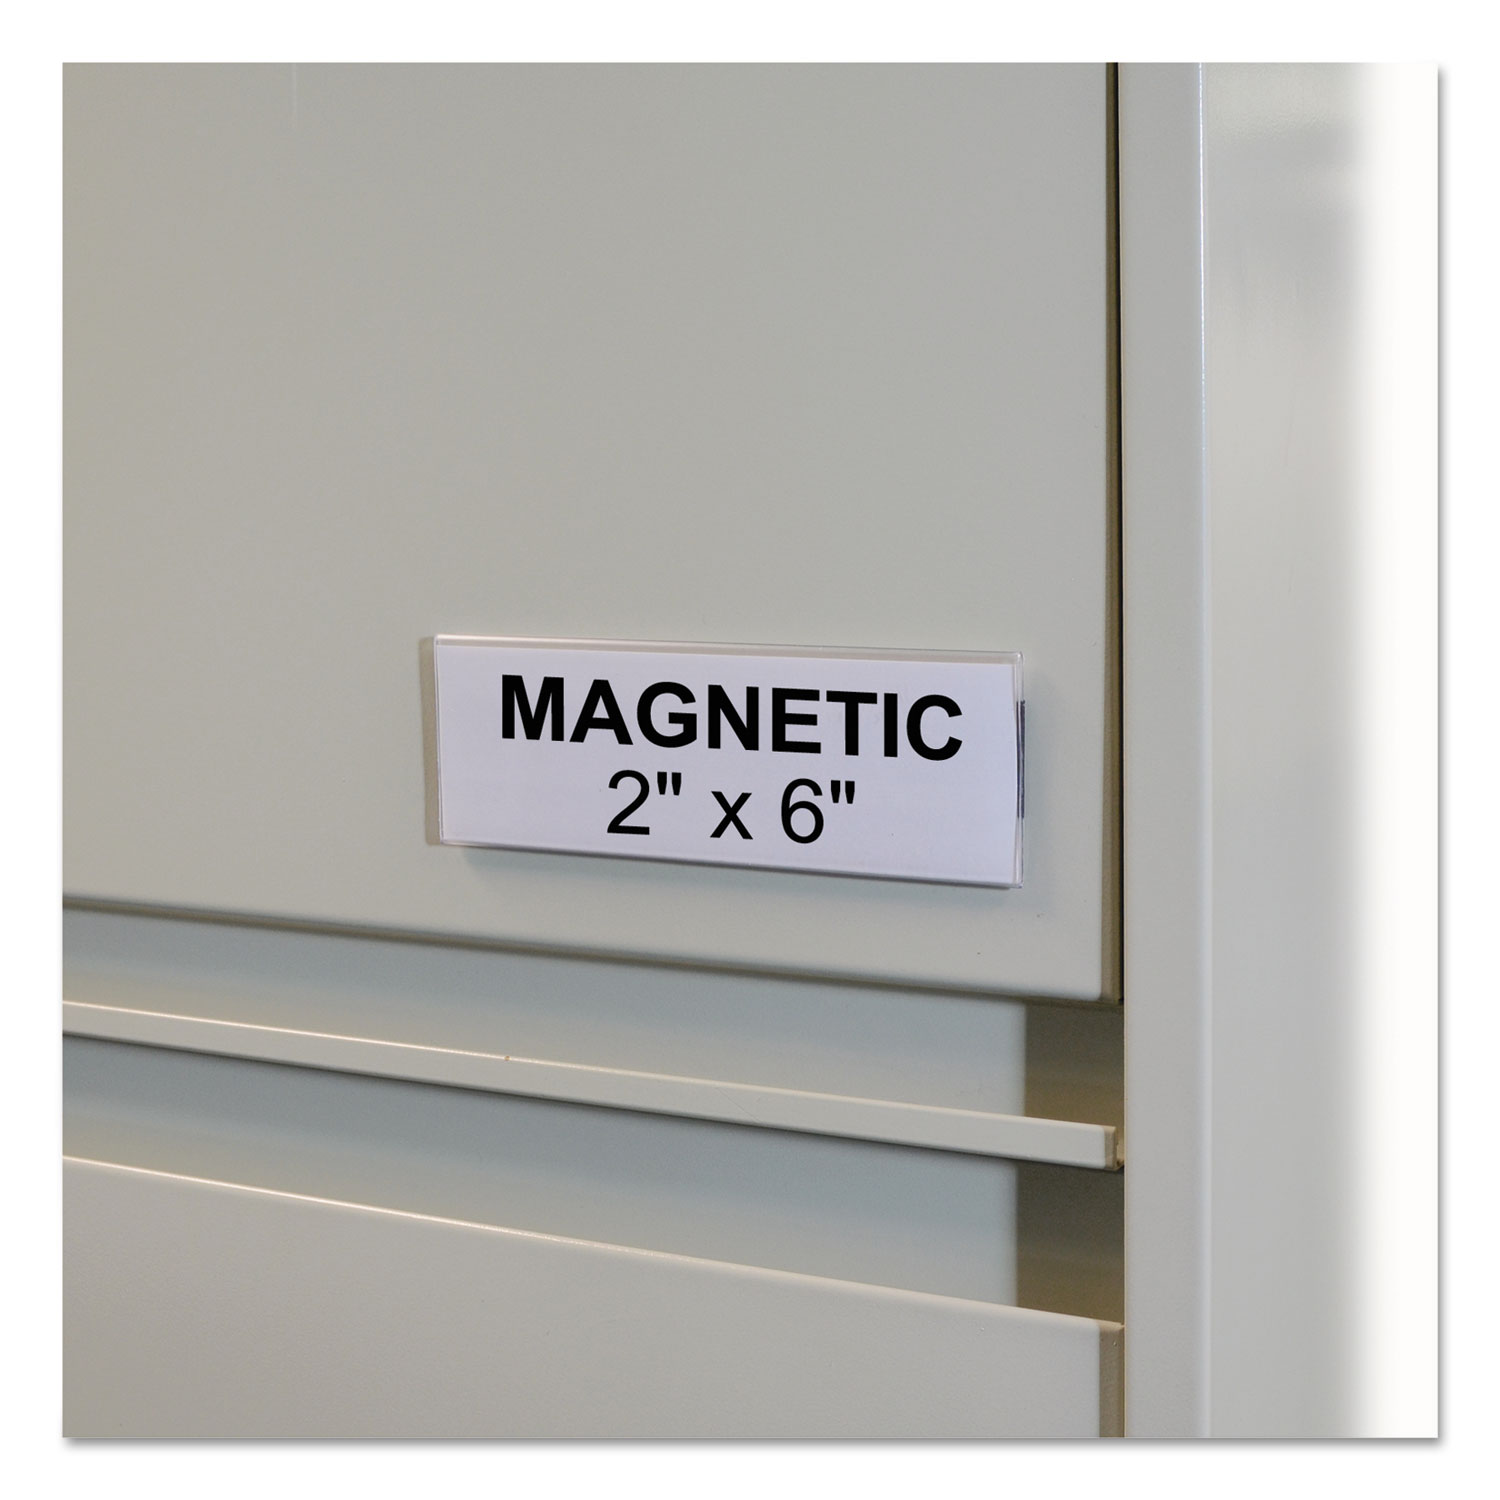 HOL-DEX Magnetic Shelf/Bin Label Holders, Side Load, 2" x 6", Clear, 10/Box